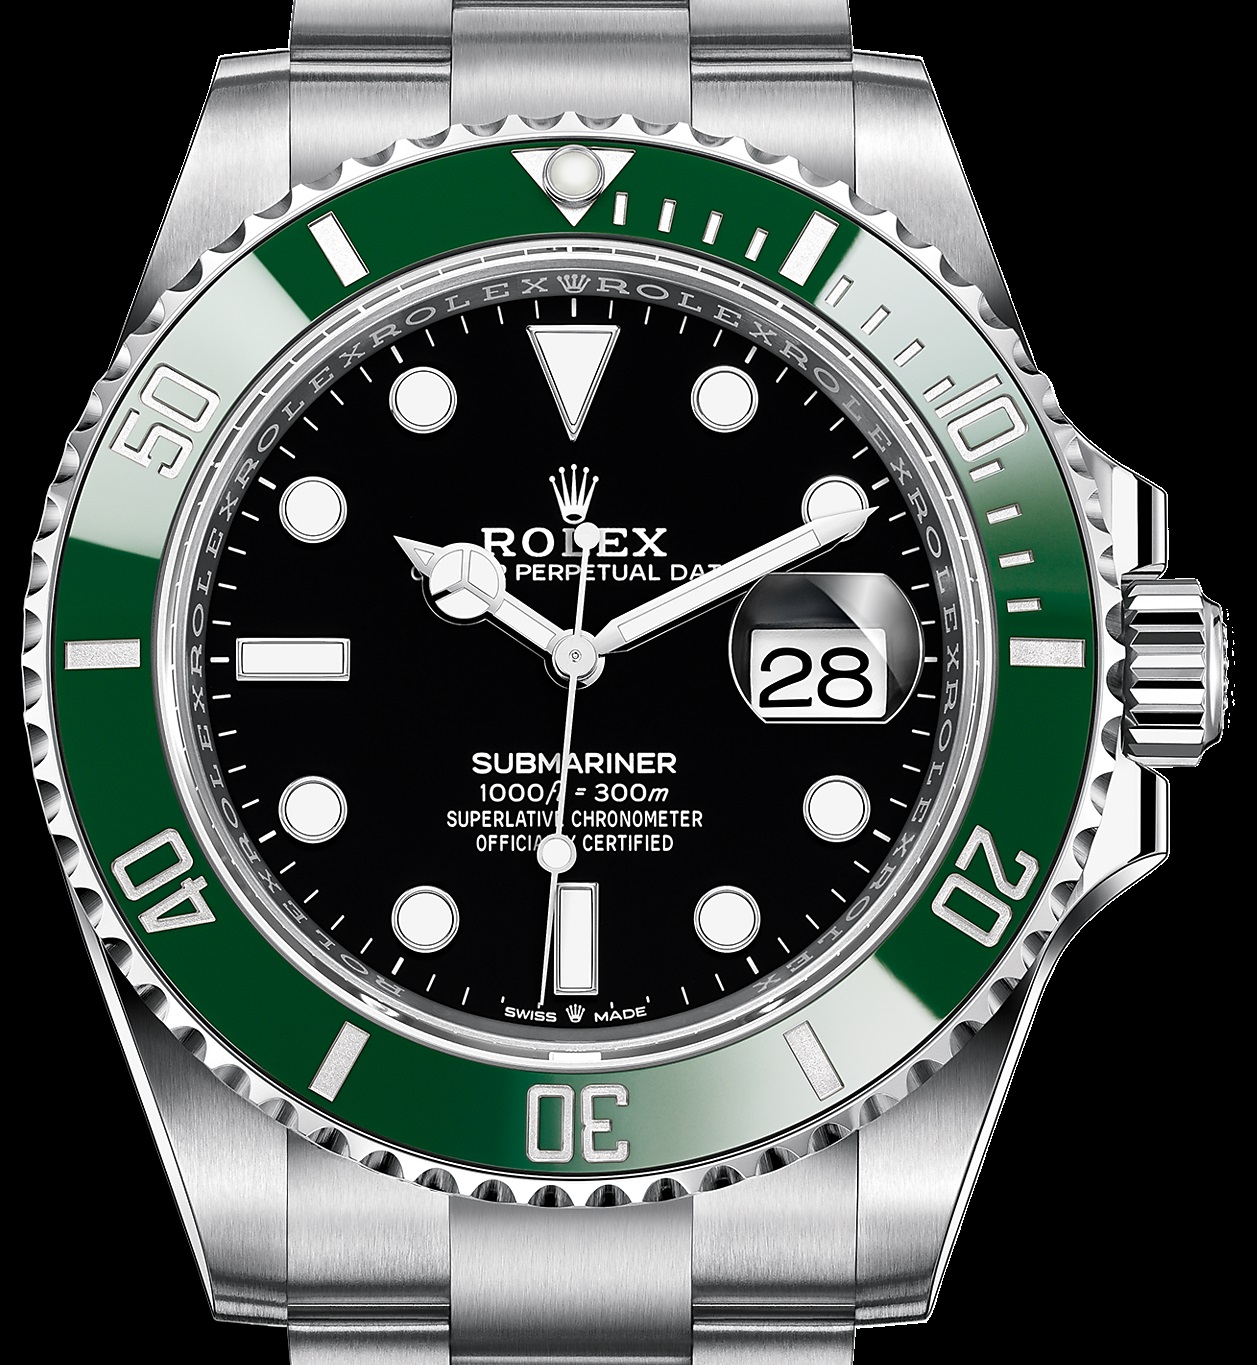 Rolex Submariner 126610LV Watch With 